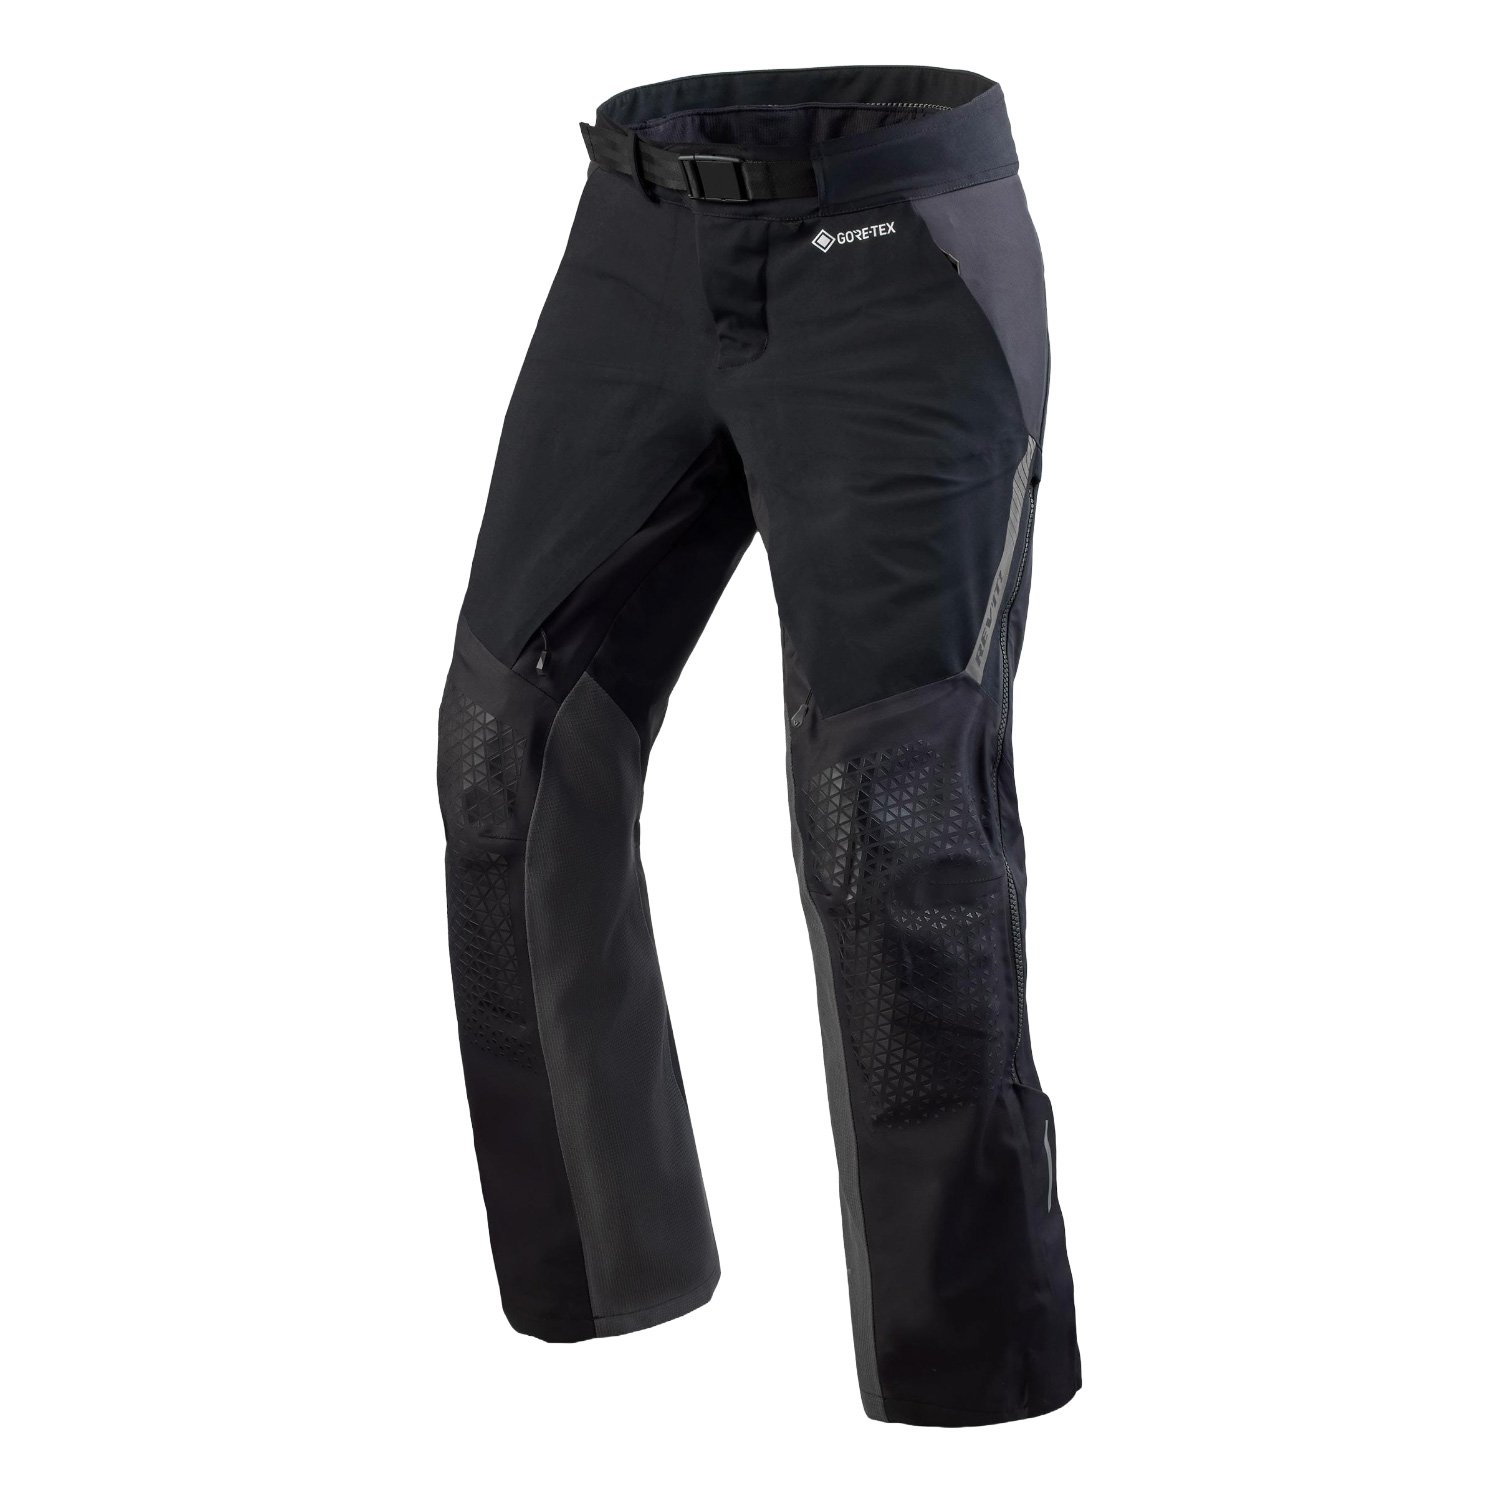 Image of REV'IT! Stratum GTX Black Grey Standard Motorcycle Pants Size L ID 8700001351140